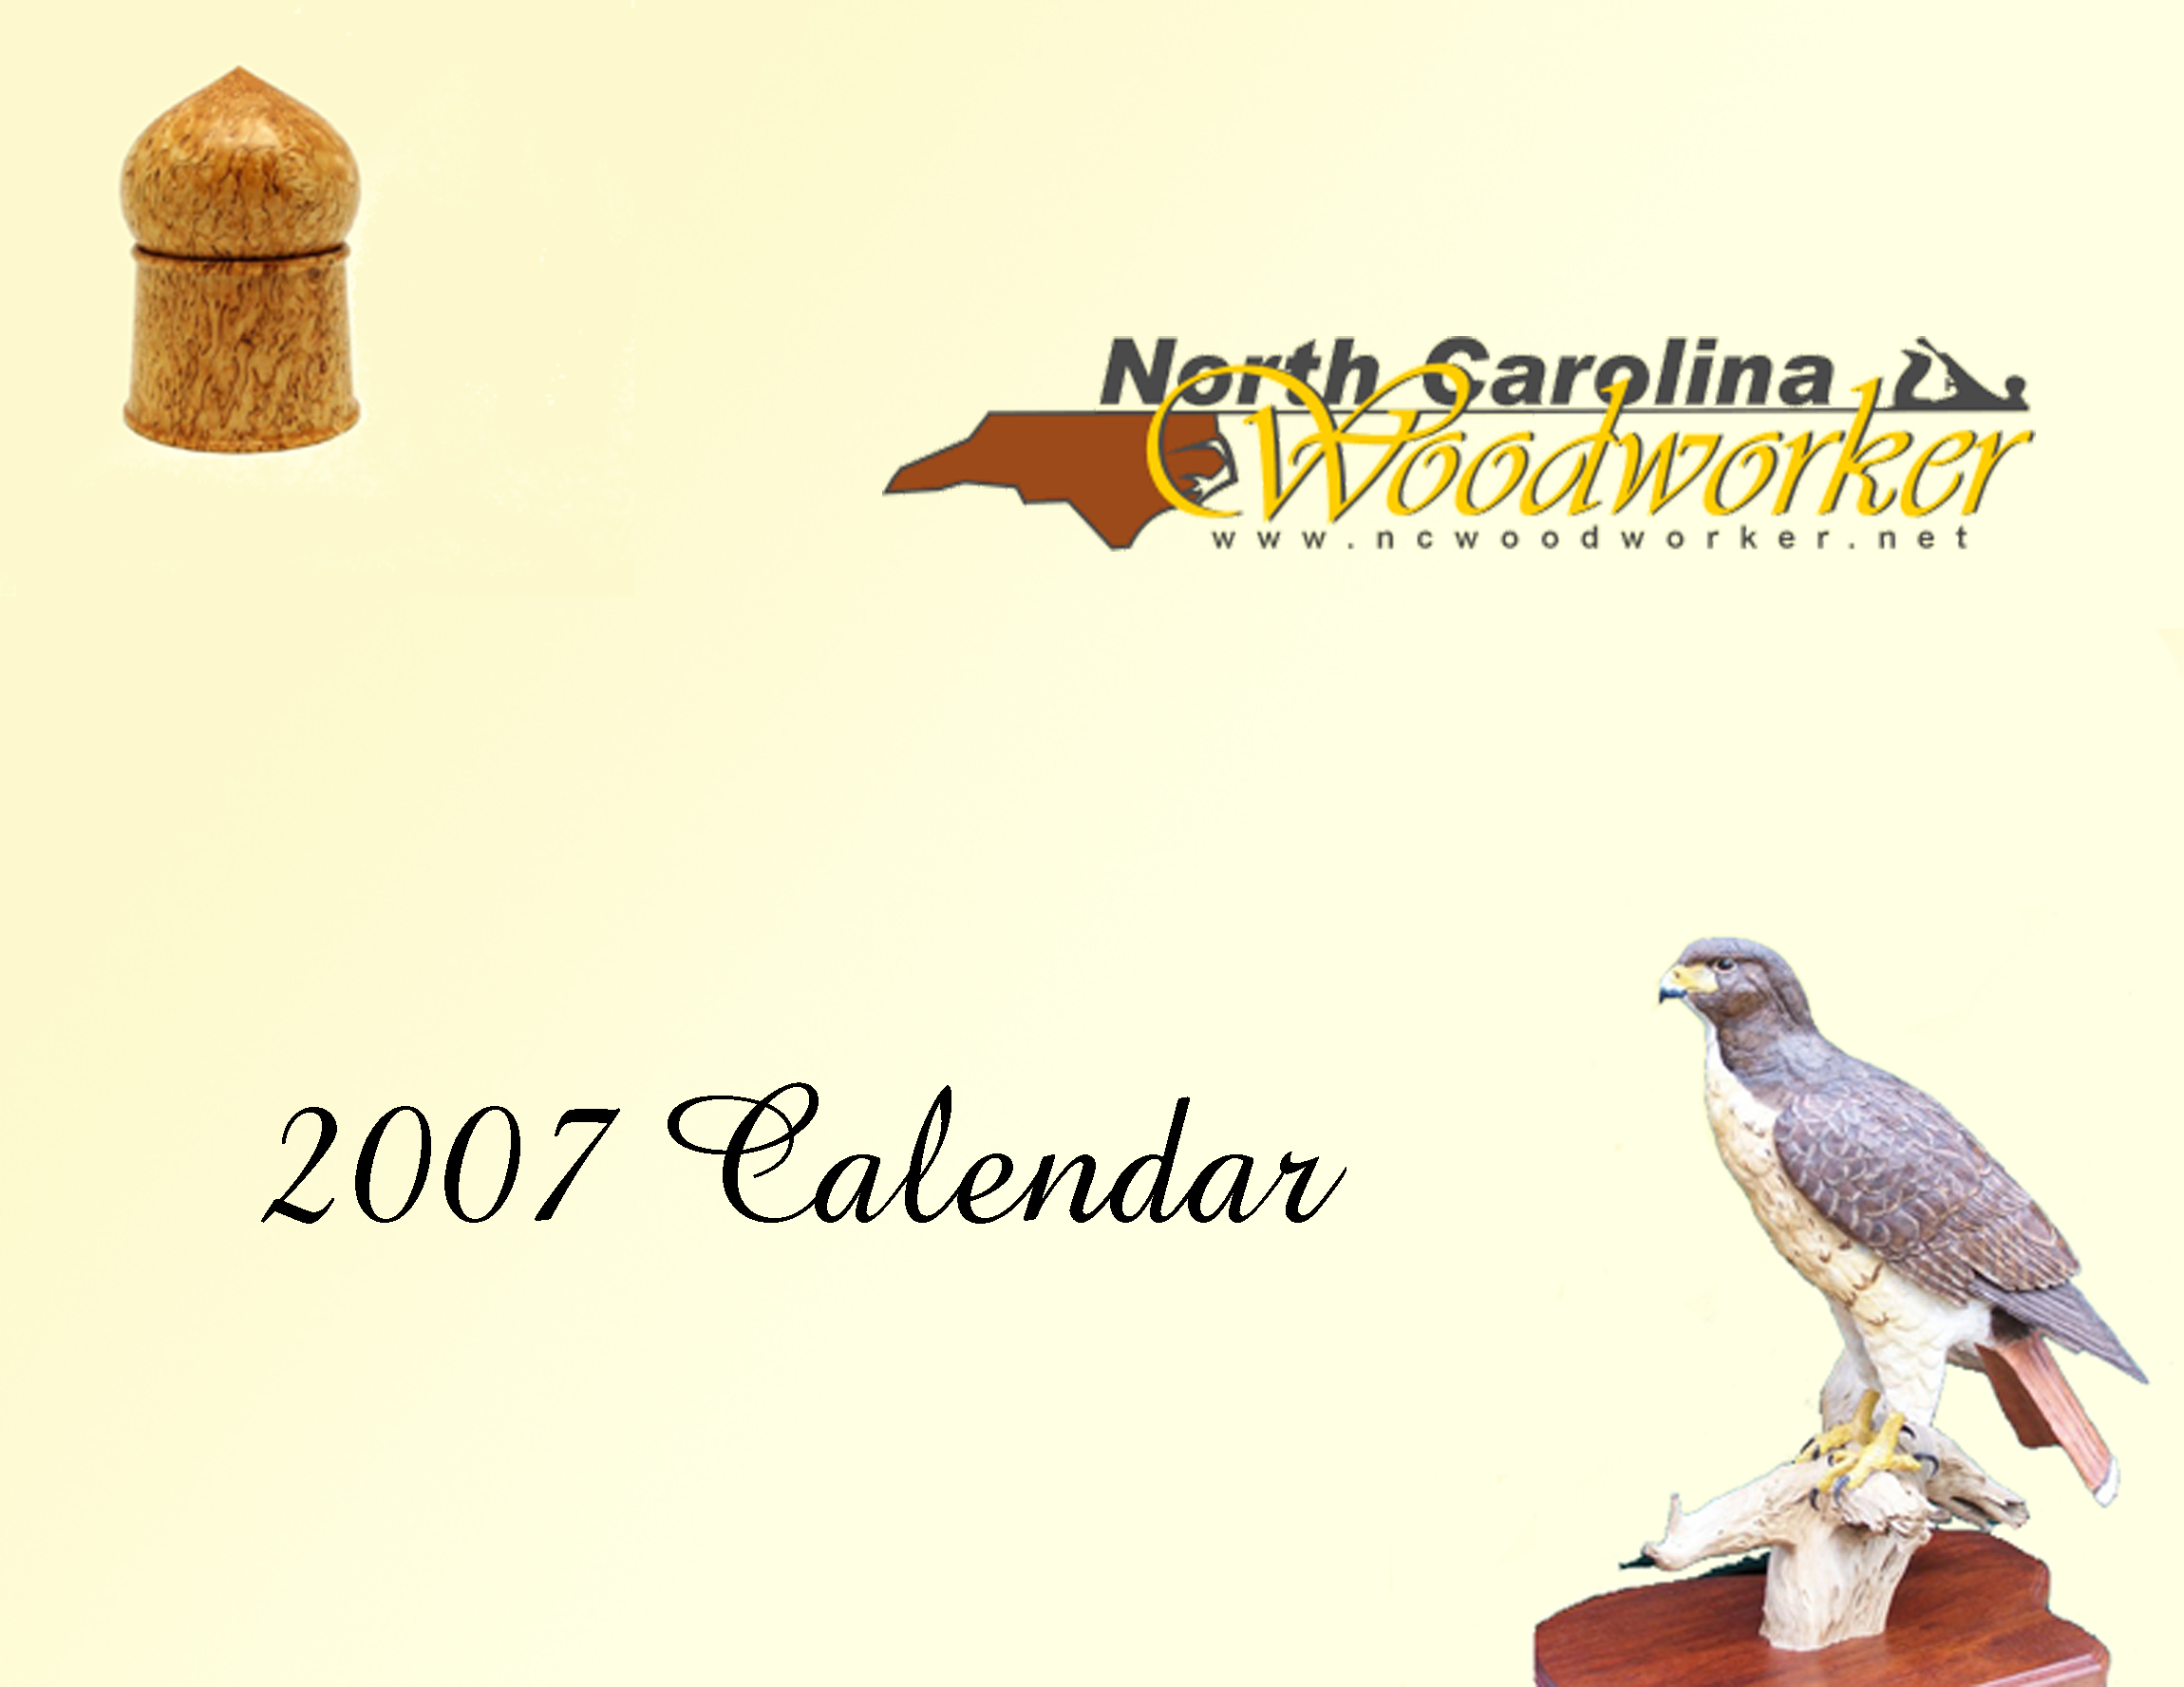 NCWoodworker 2007 Calendar cover